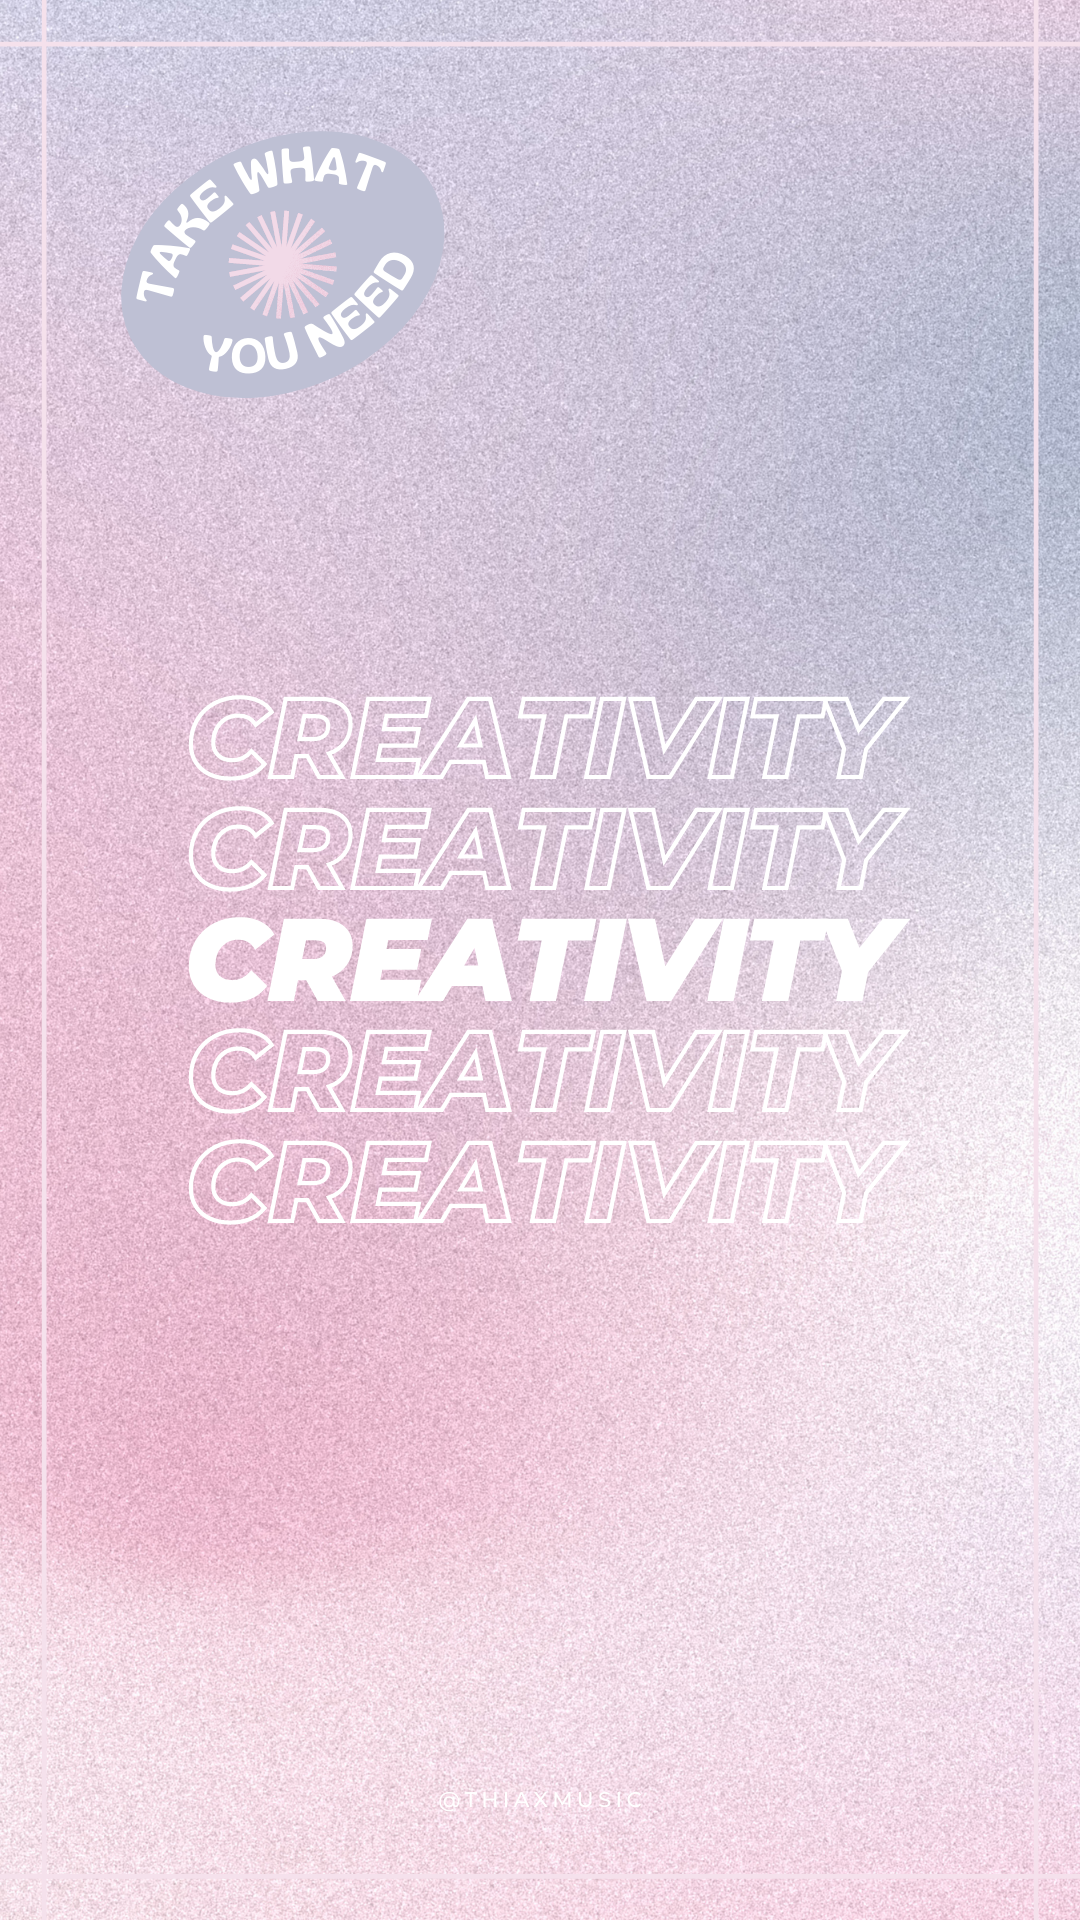 07 Creativity.png